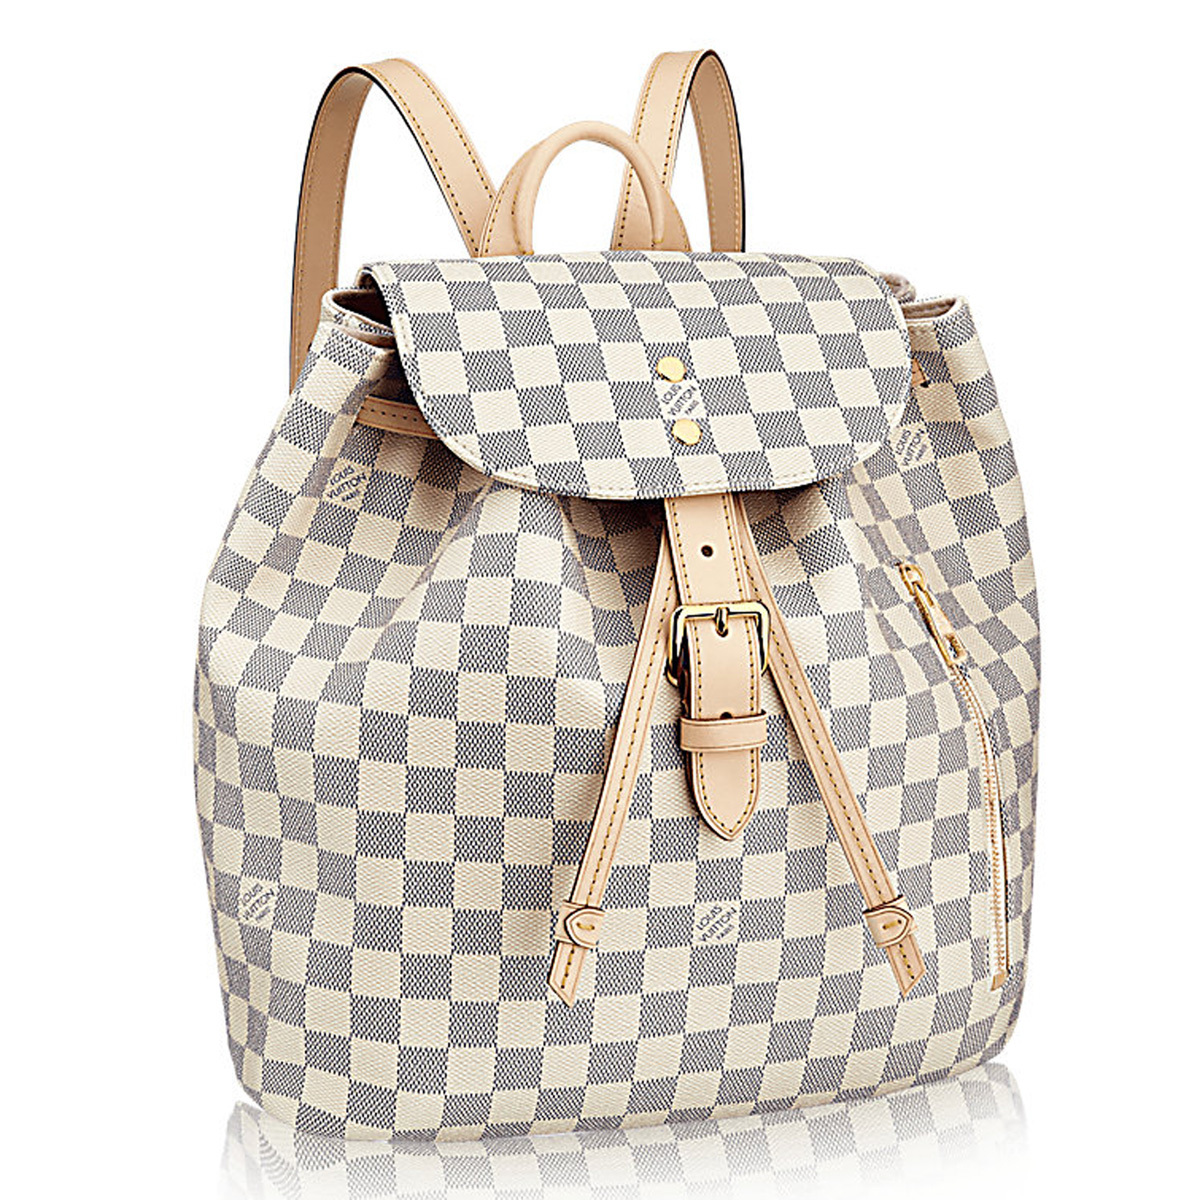 LV backpack louis vuitton damier azur replica designer bags white louis vuitton bag womens sale ...